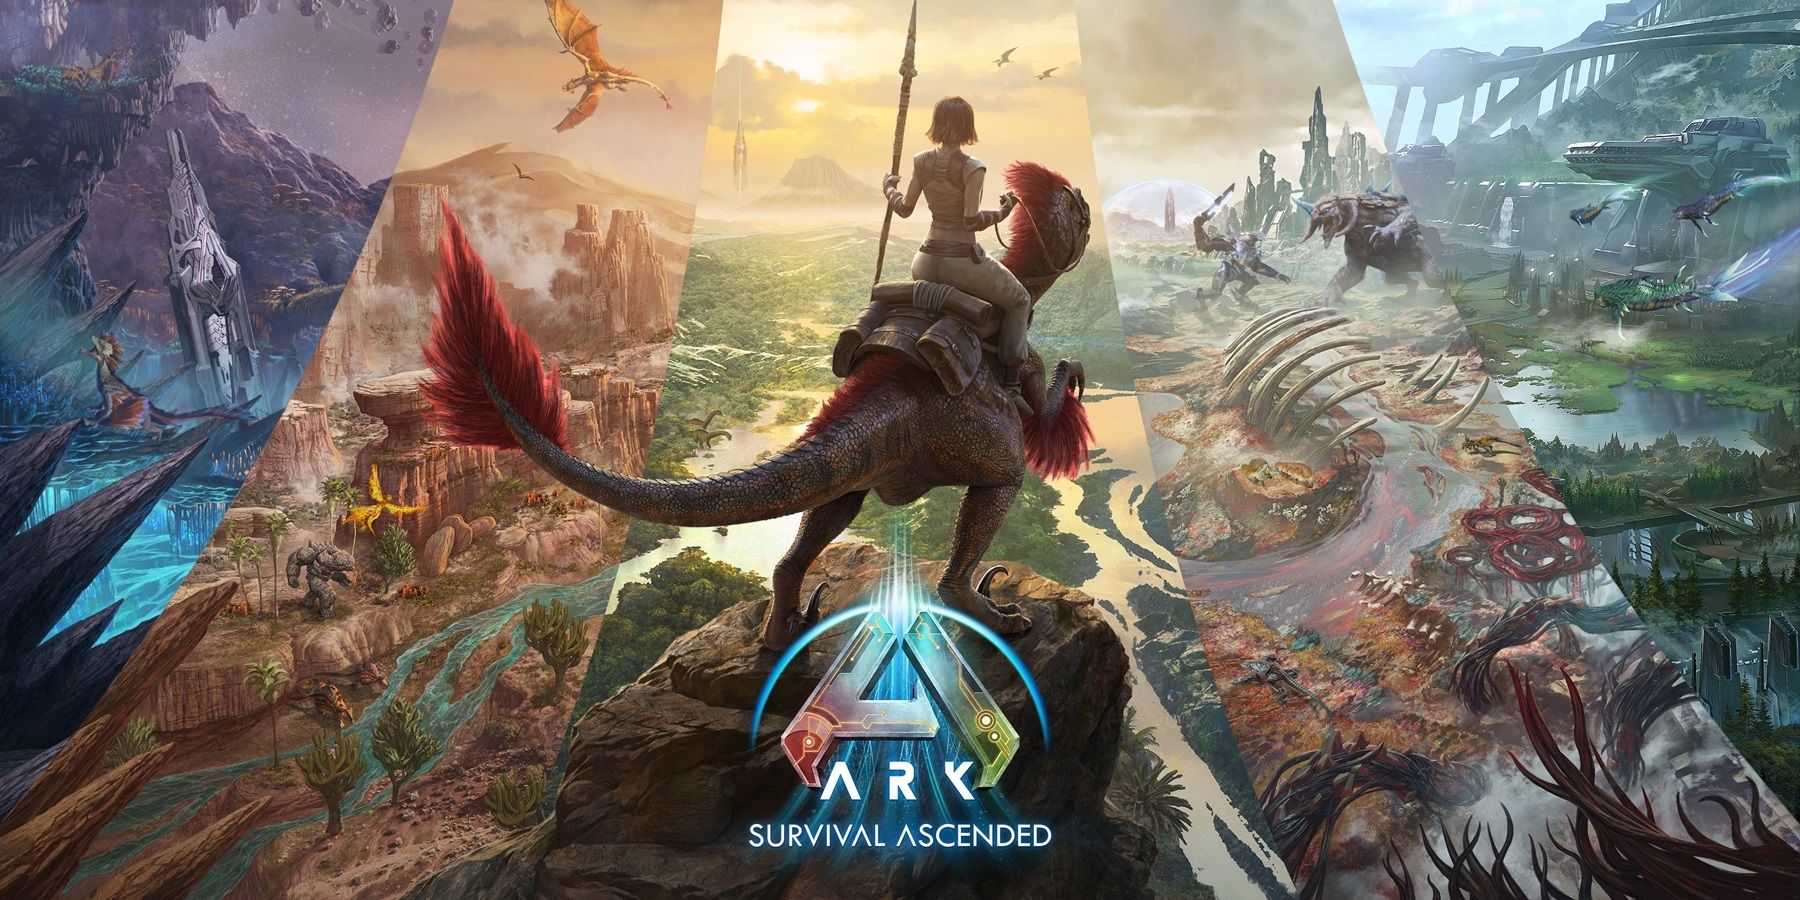 Ark 2 Vin Diesel Trailer 2021 - New game coming Ark 2 2021 with